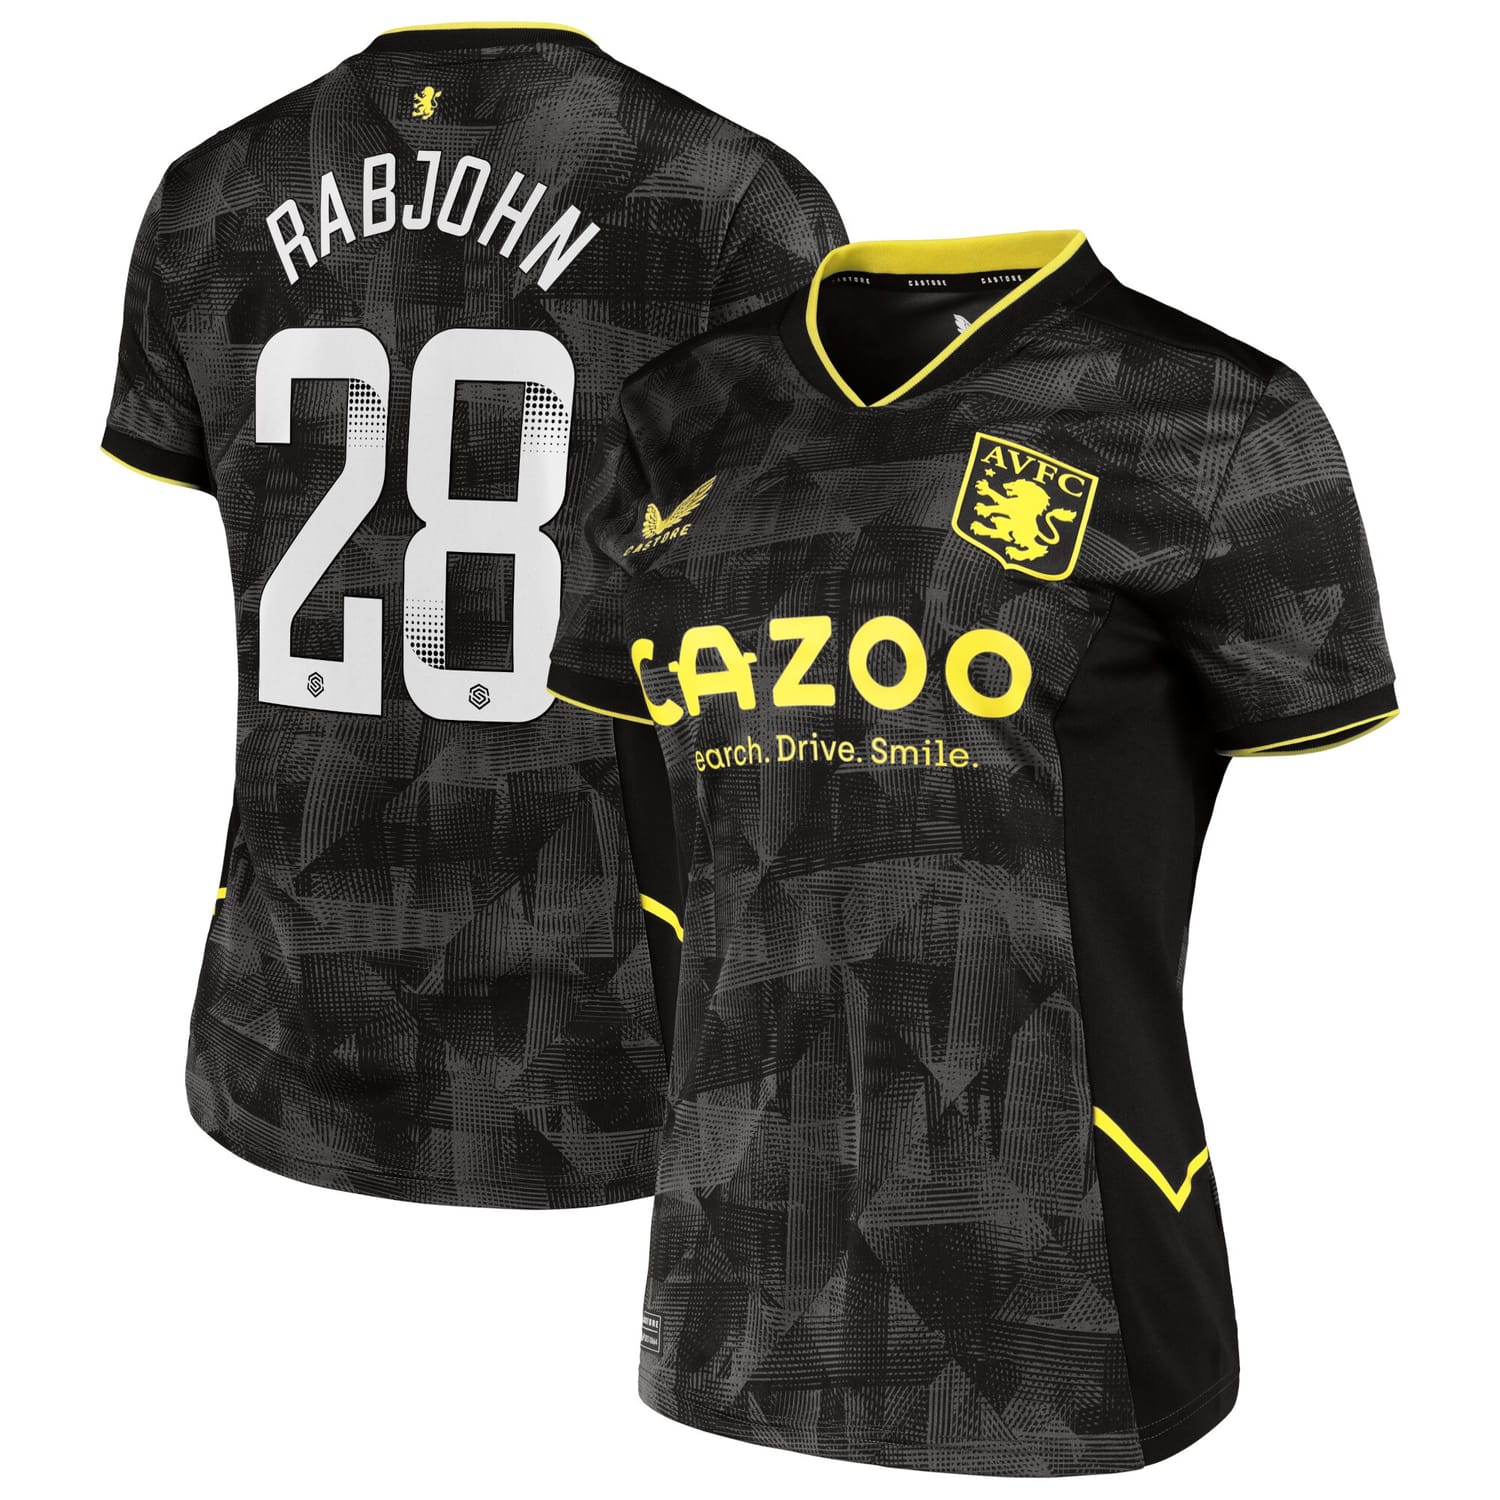 Premier League Aston Villa Third WSL Jersey Shirt 2022-23 player Evie Rabjohn 28 printing for Women